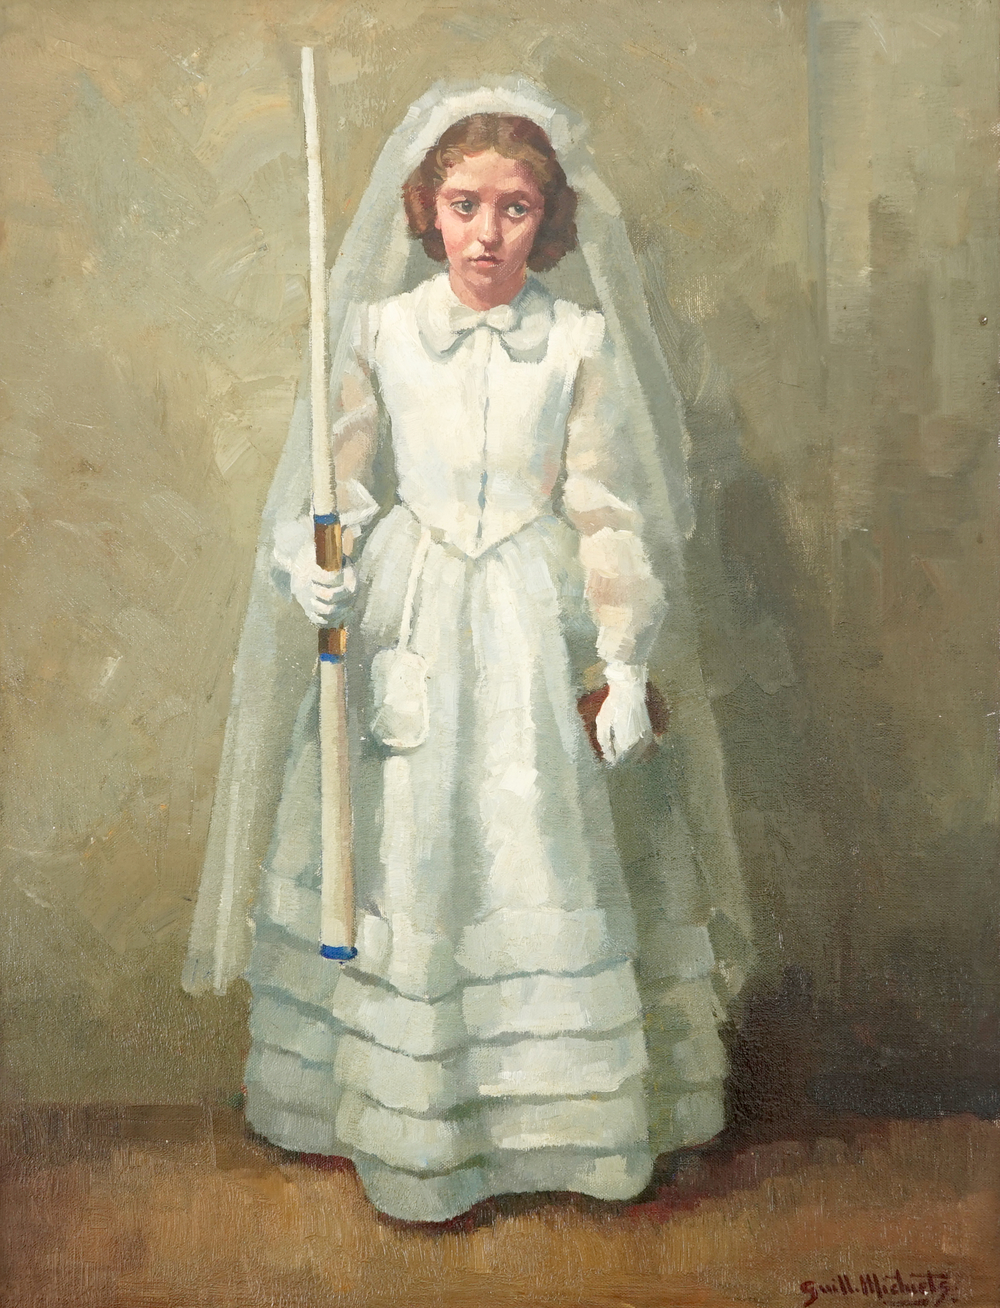 Guillaume Michiels (1909-1997), a portrait of a communiant in lace dress, oil on canvas